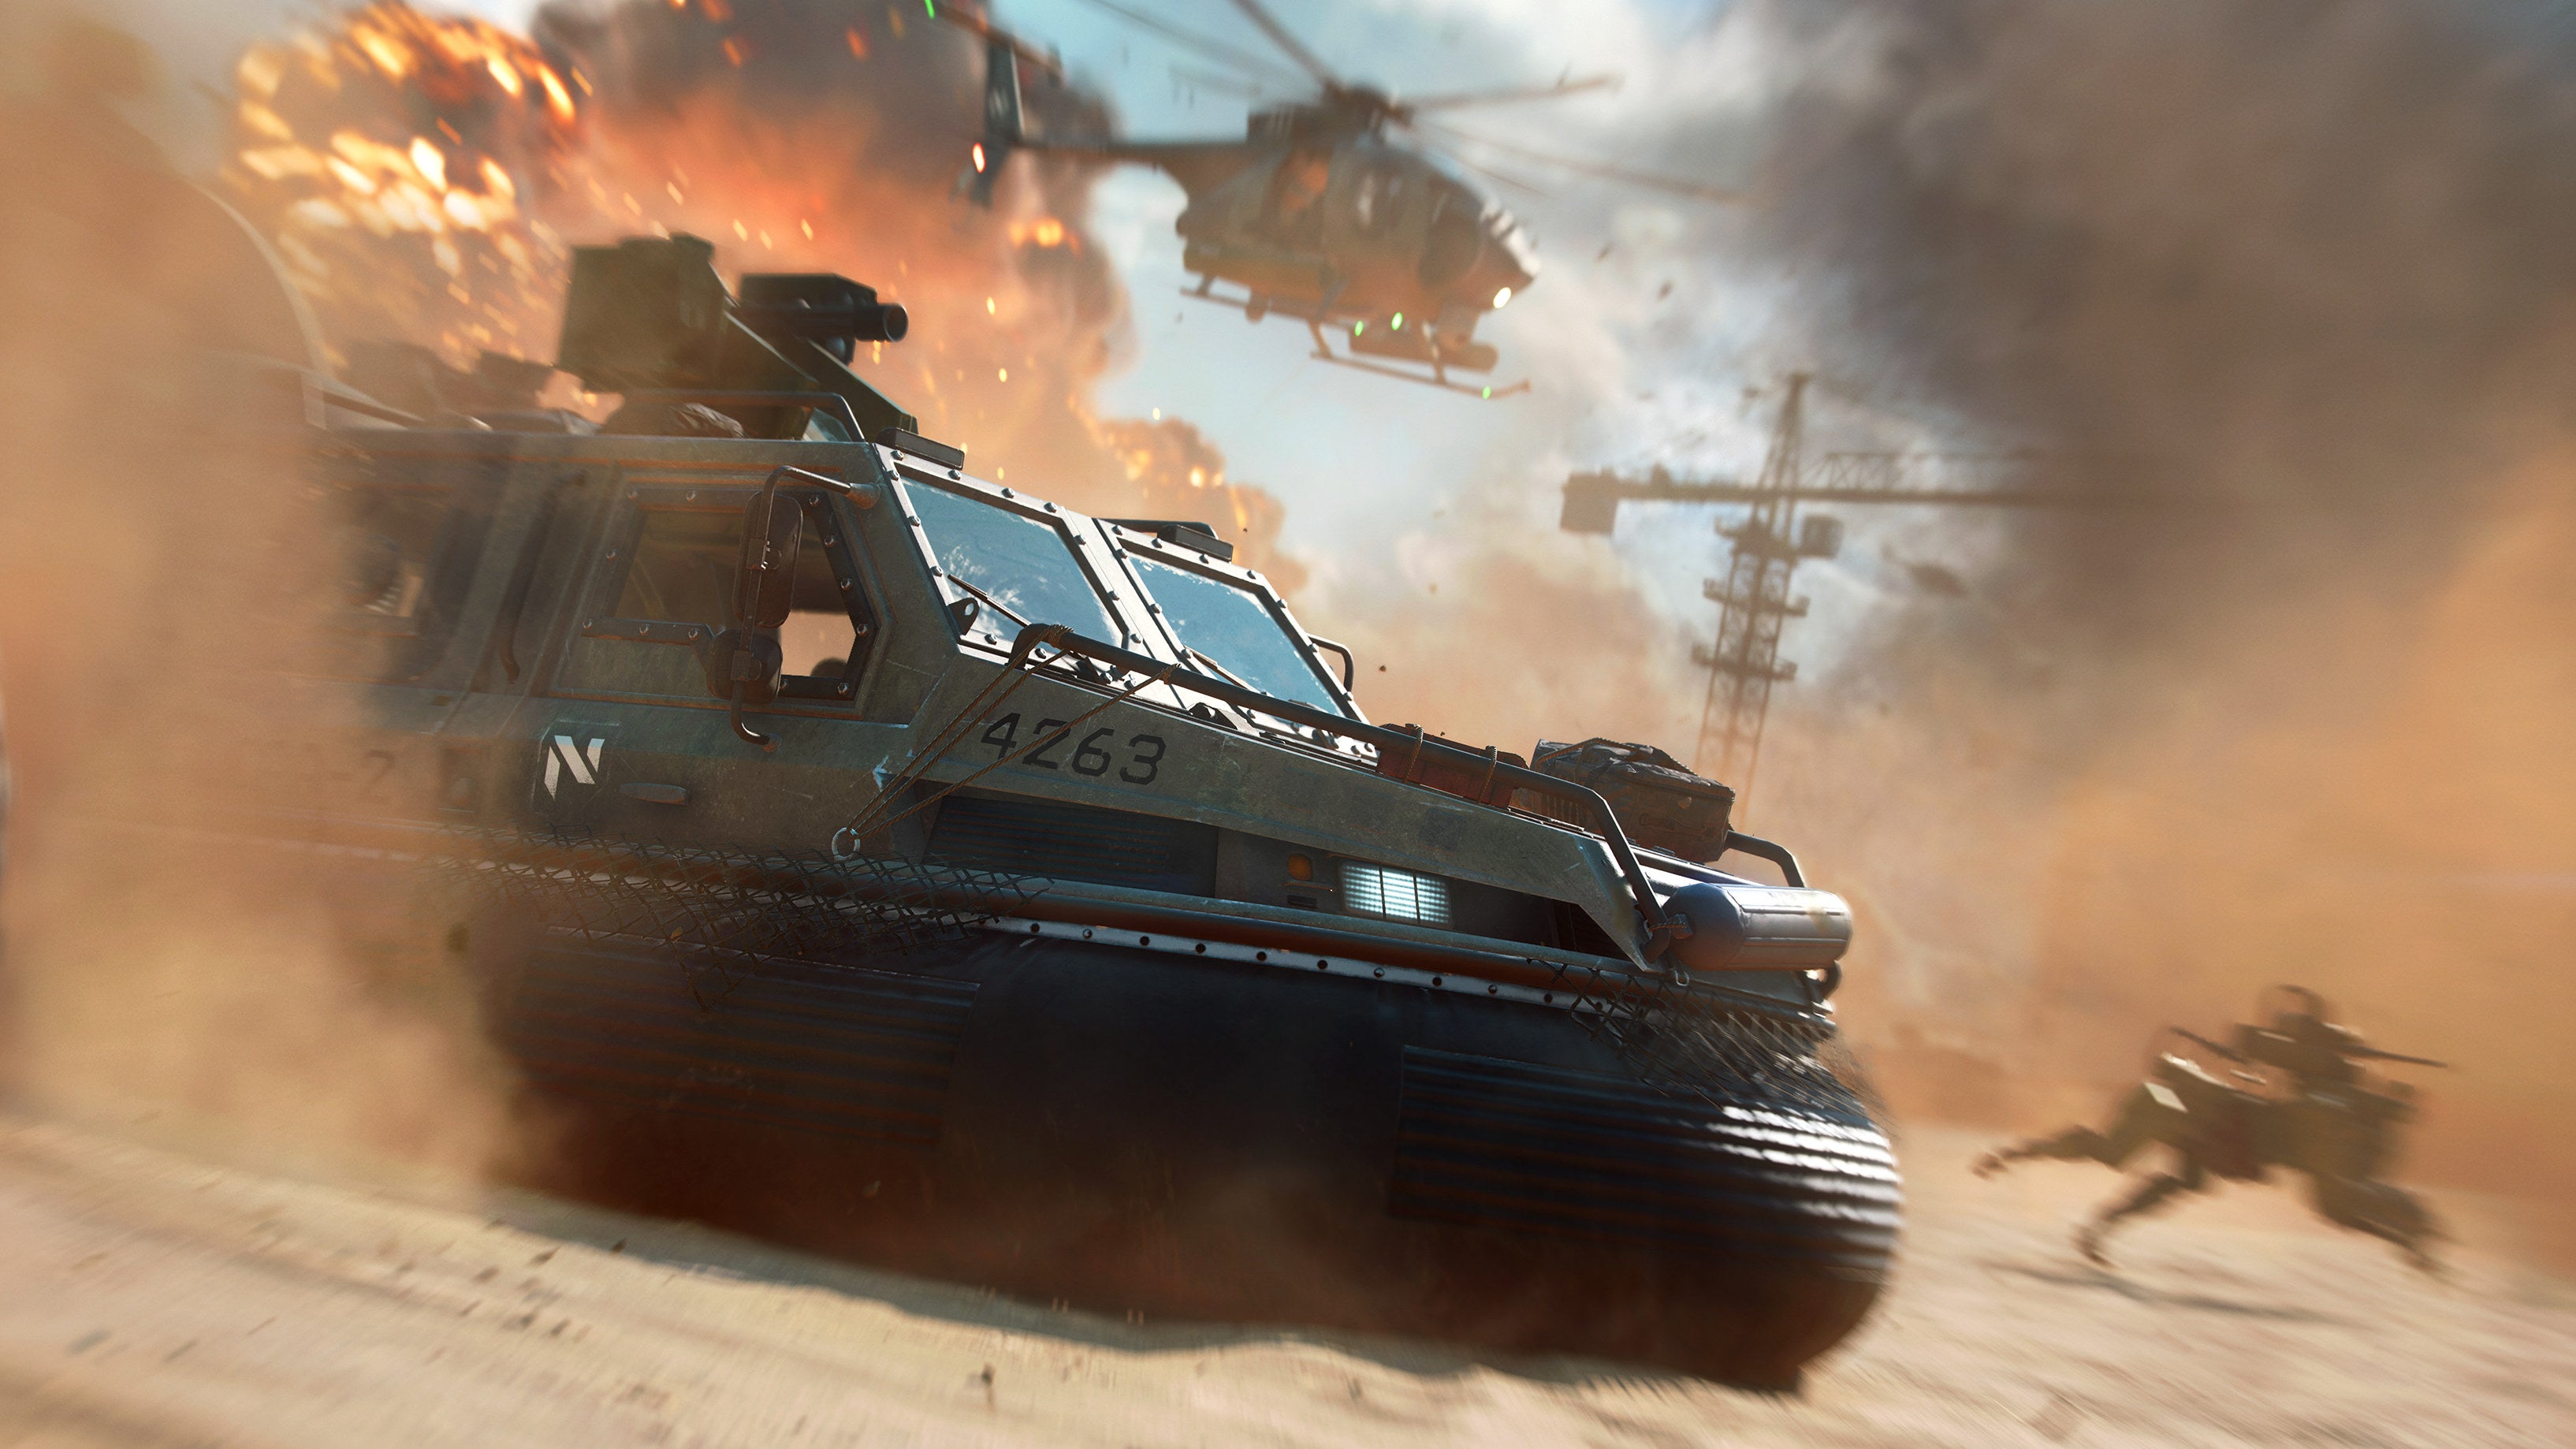 The dreaded hovercraft in a Battlefield 2042 screenshot.